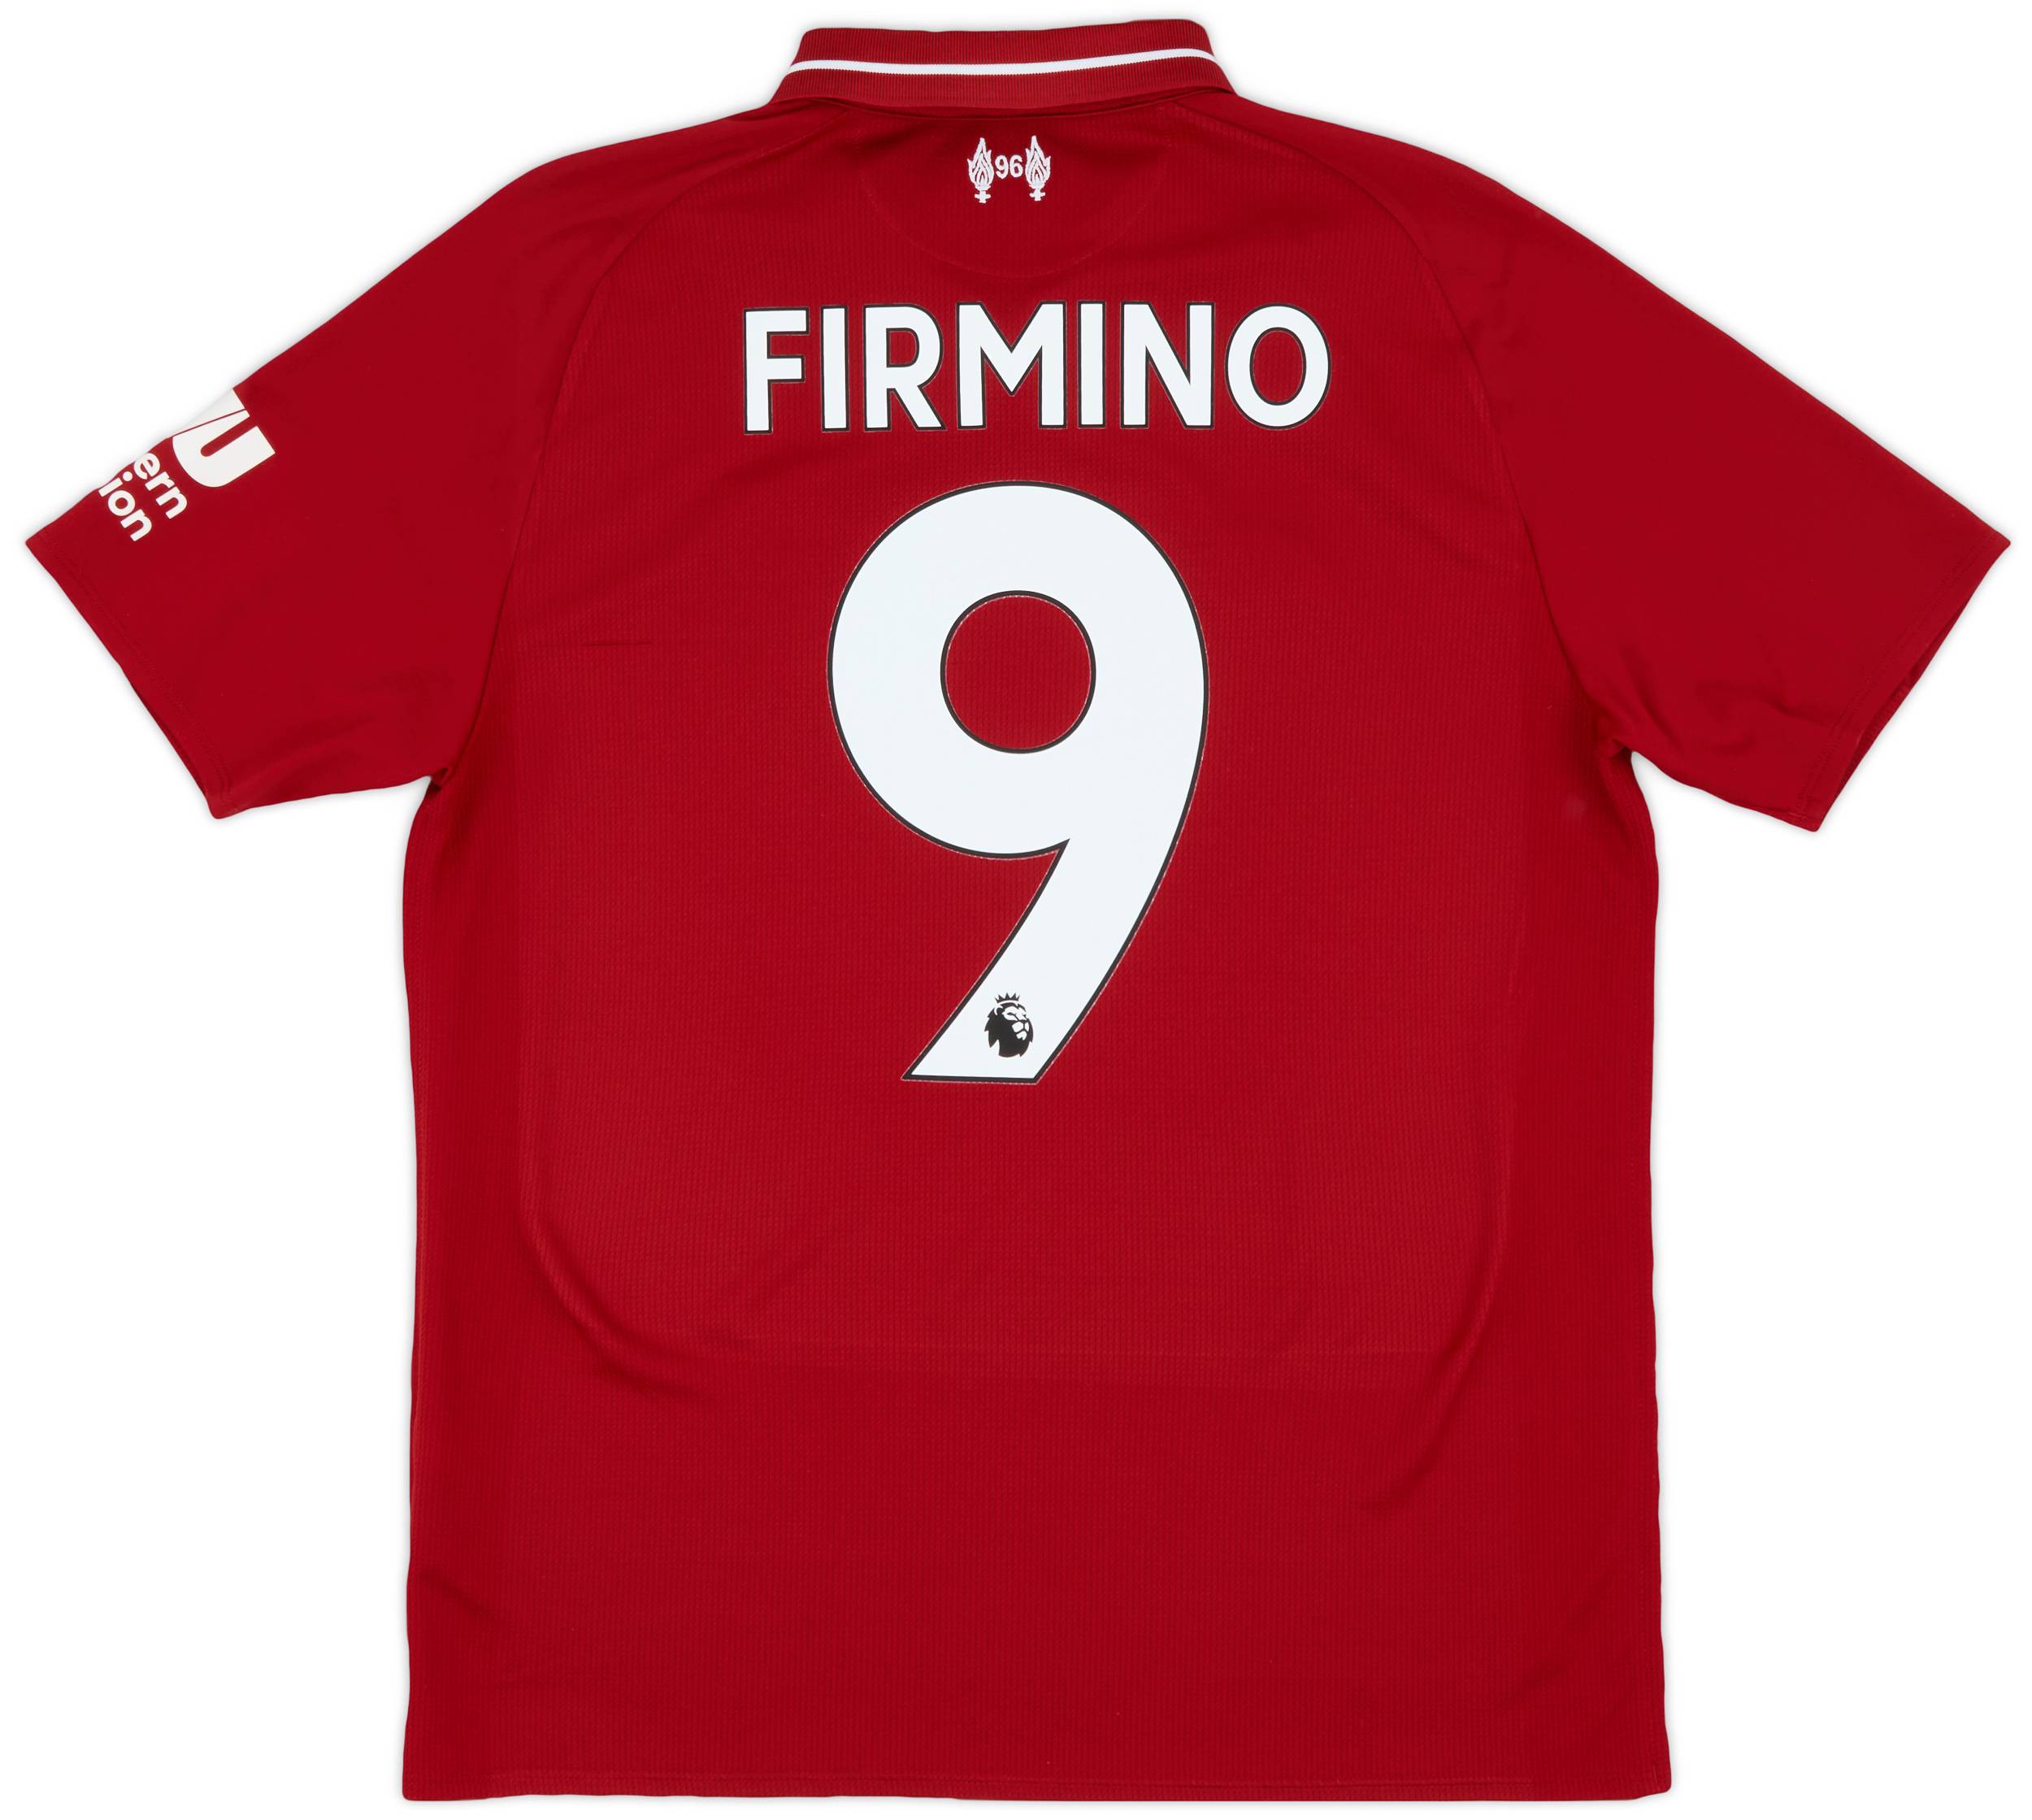 2018-19 Liverpool Home Shirt Firmino #9 - 7/10 - (S)